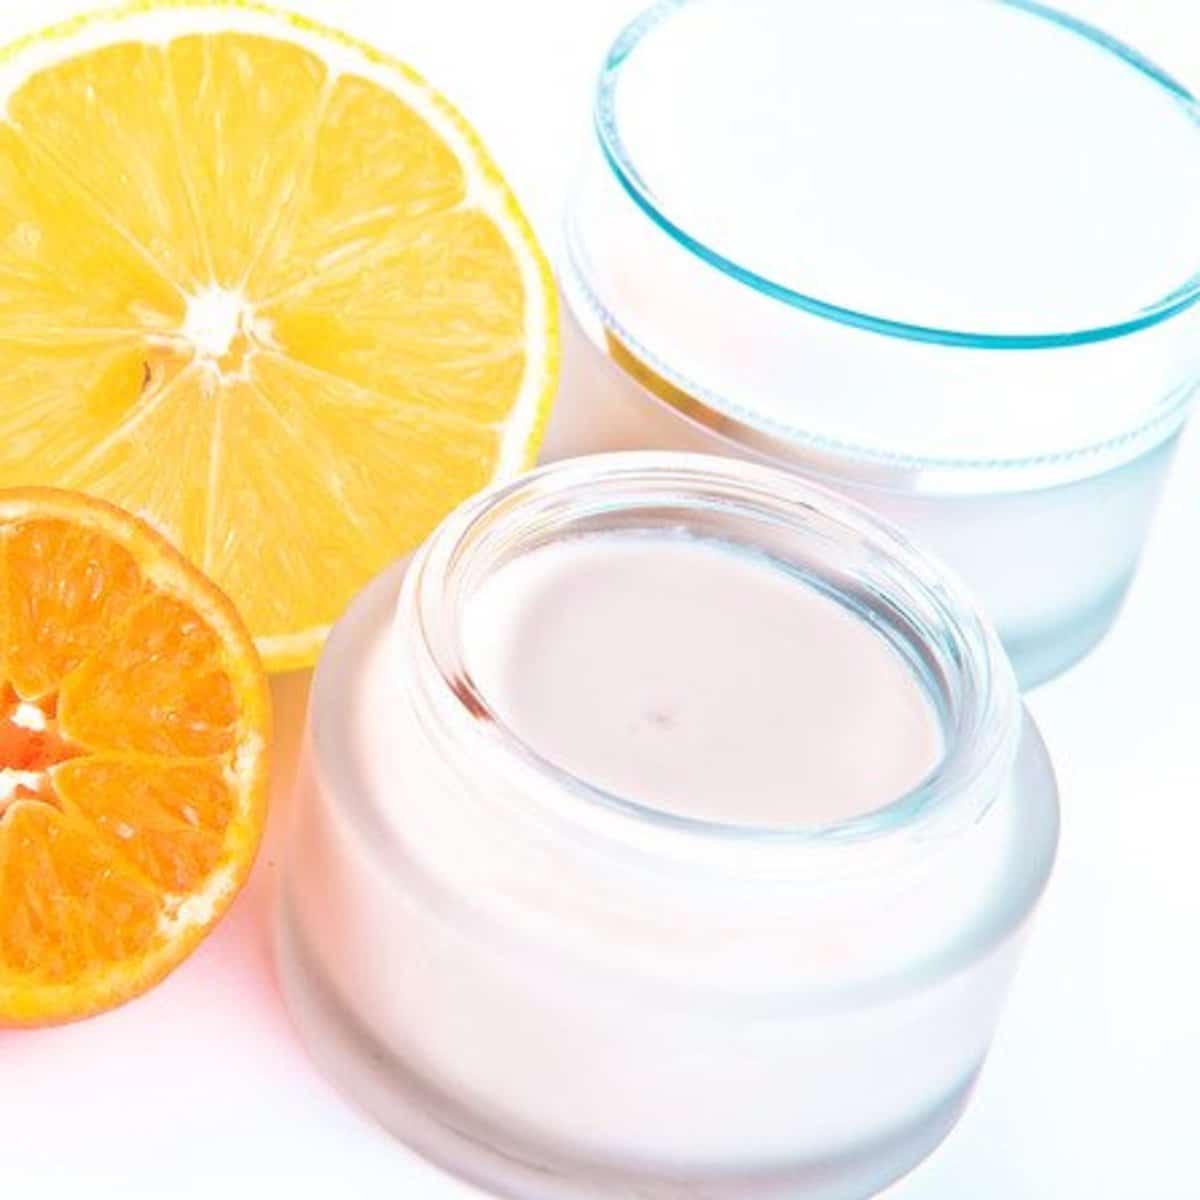 8 Natural Ingredients To Lighten Skin and Remove Dark Spots